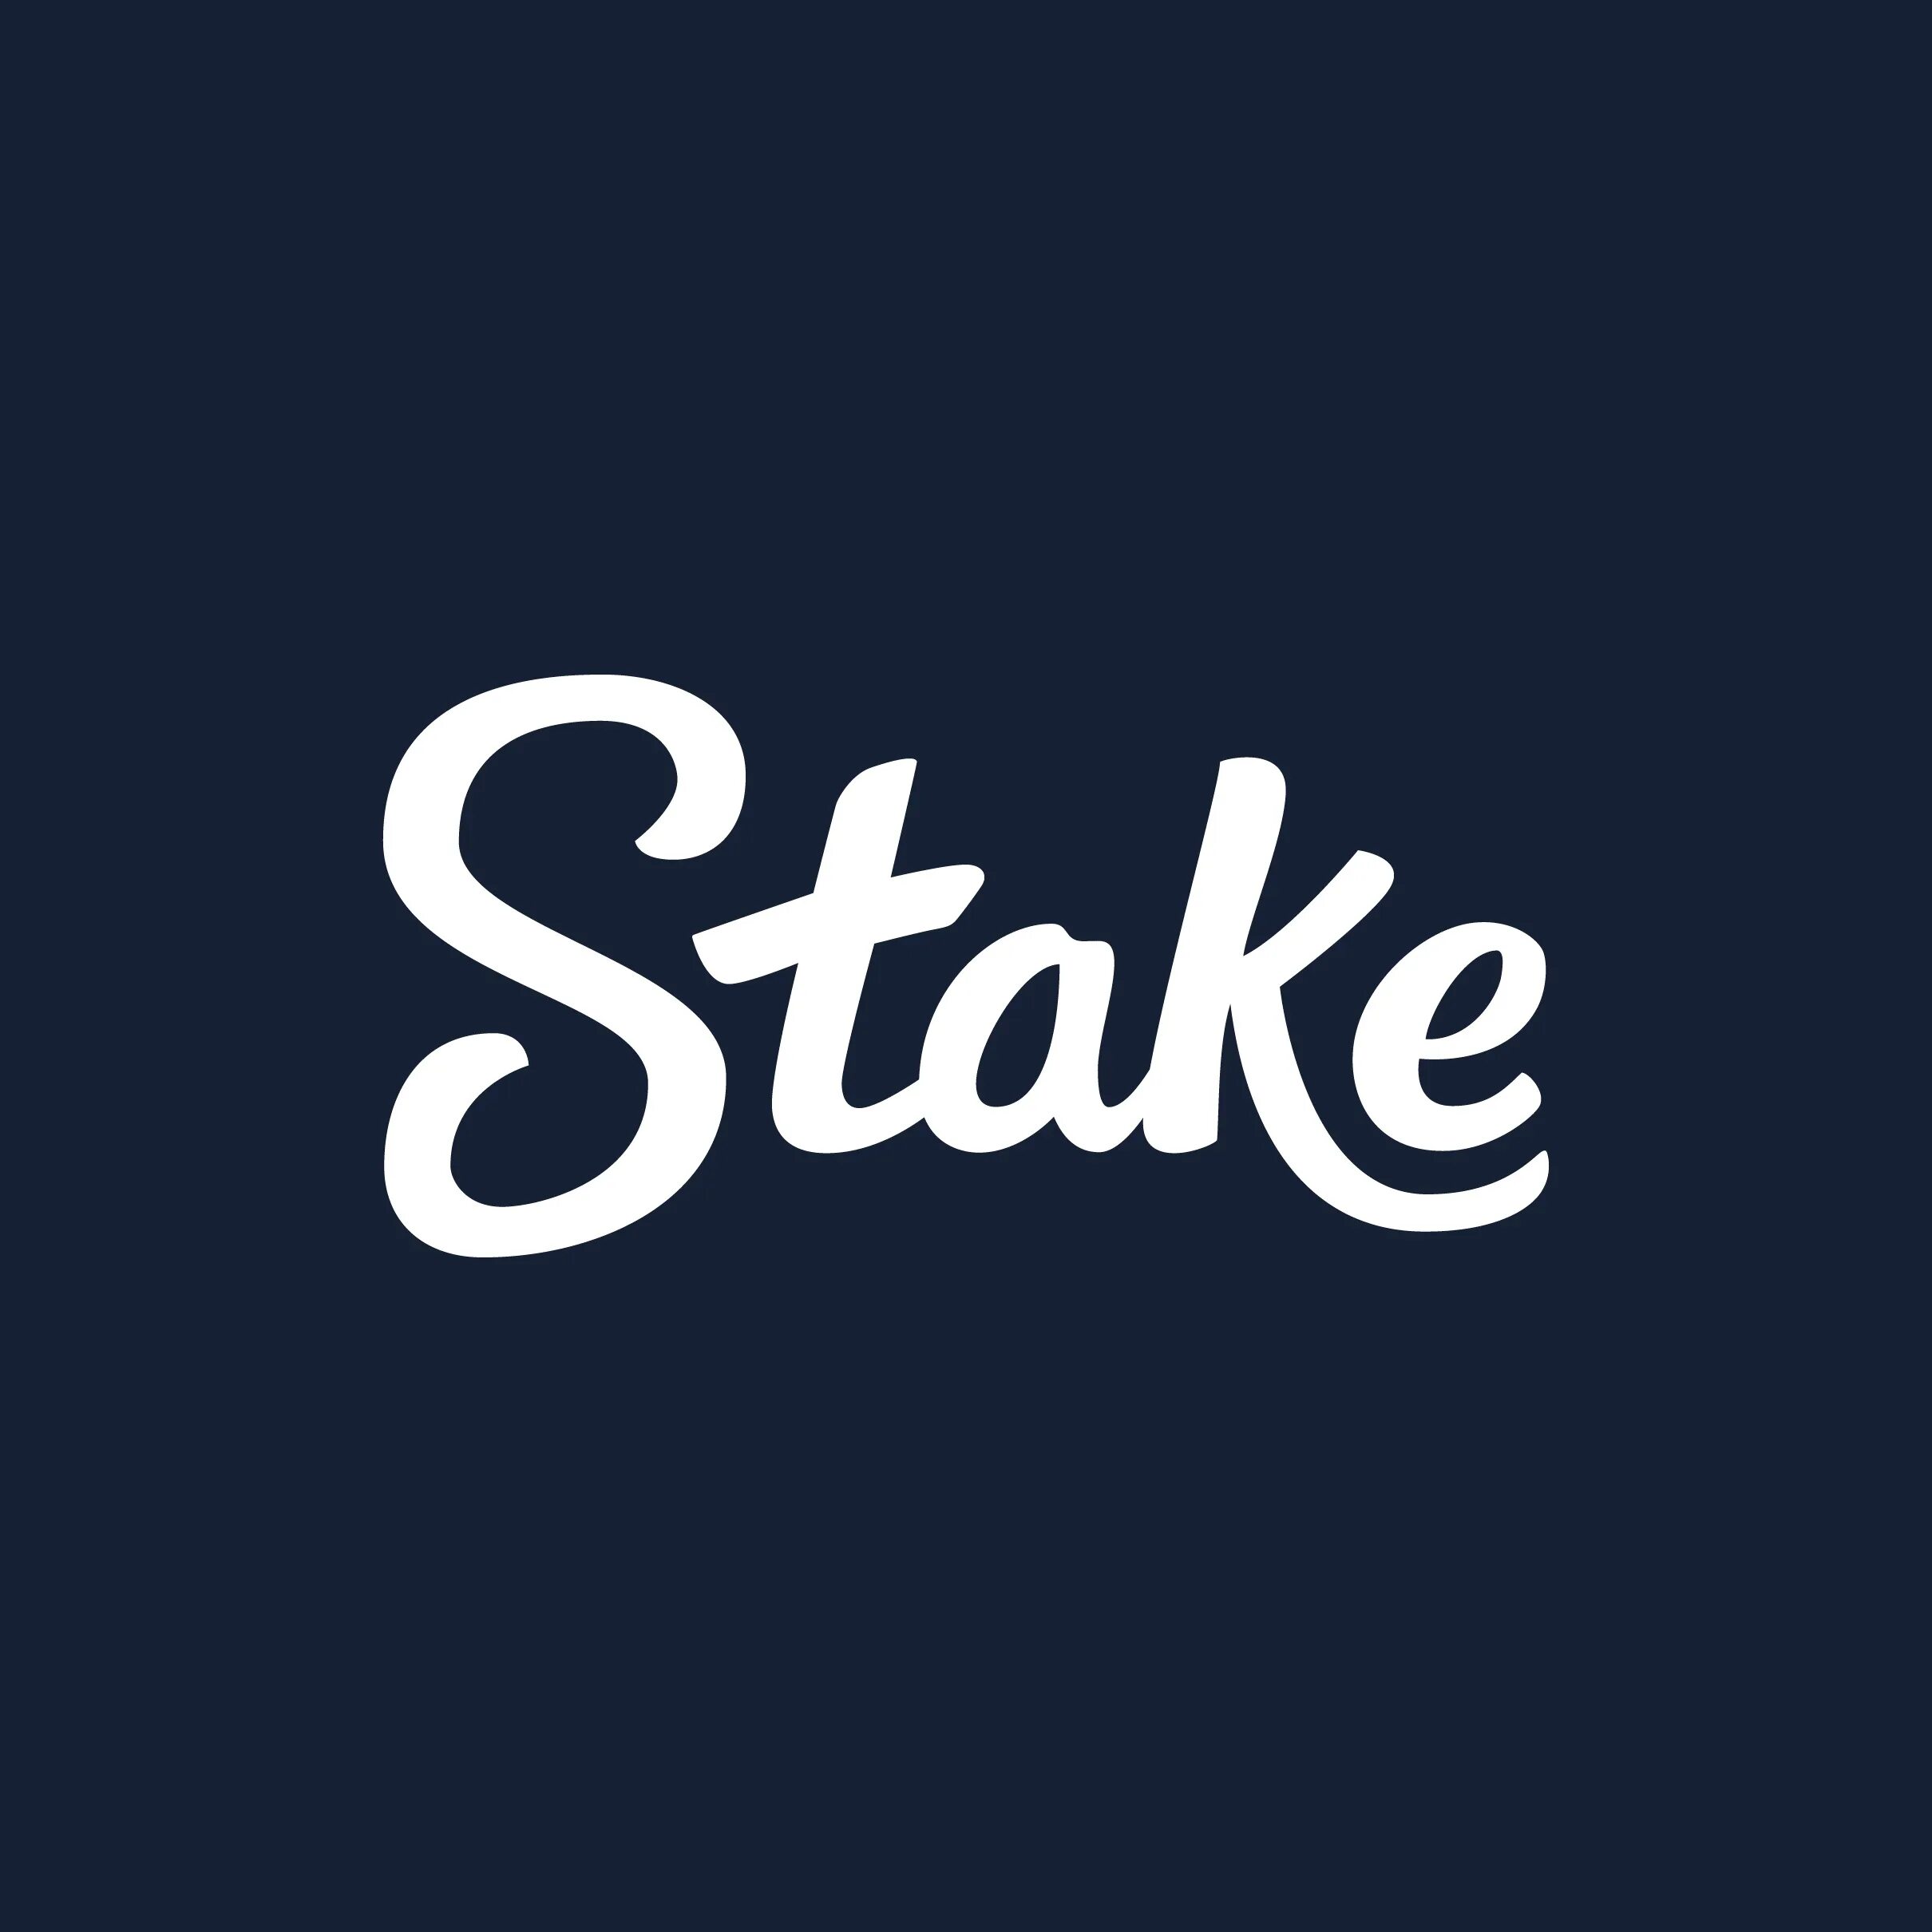 Stake ru. Stake Casino. Stake логотип. Казино stake логотип. Стейк казино.